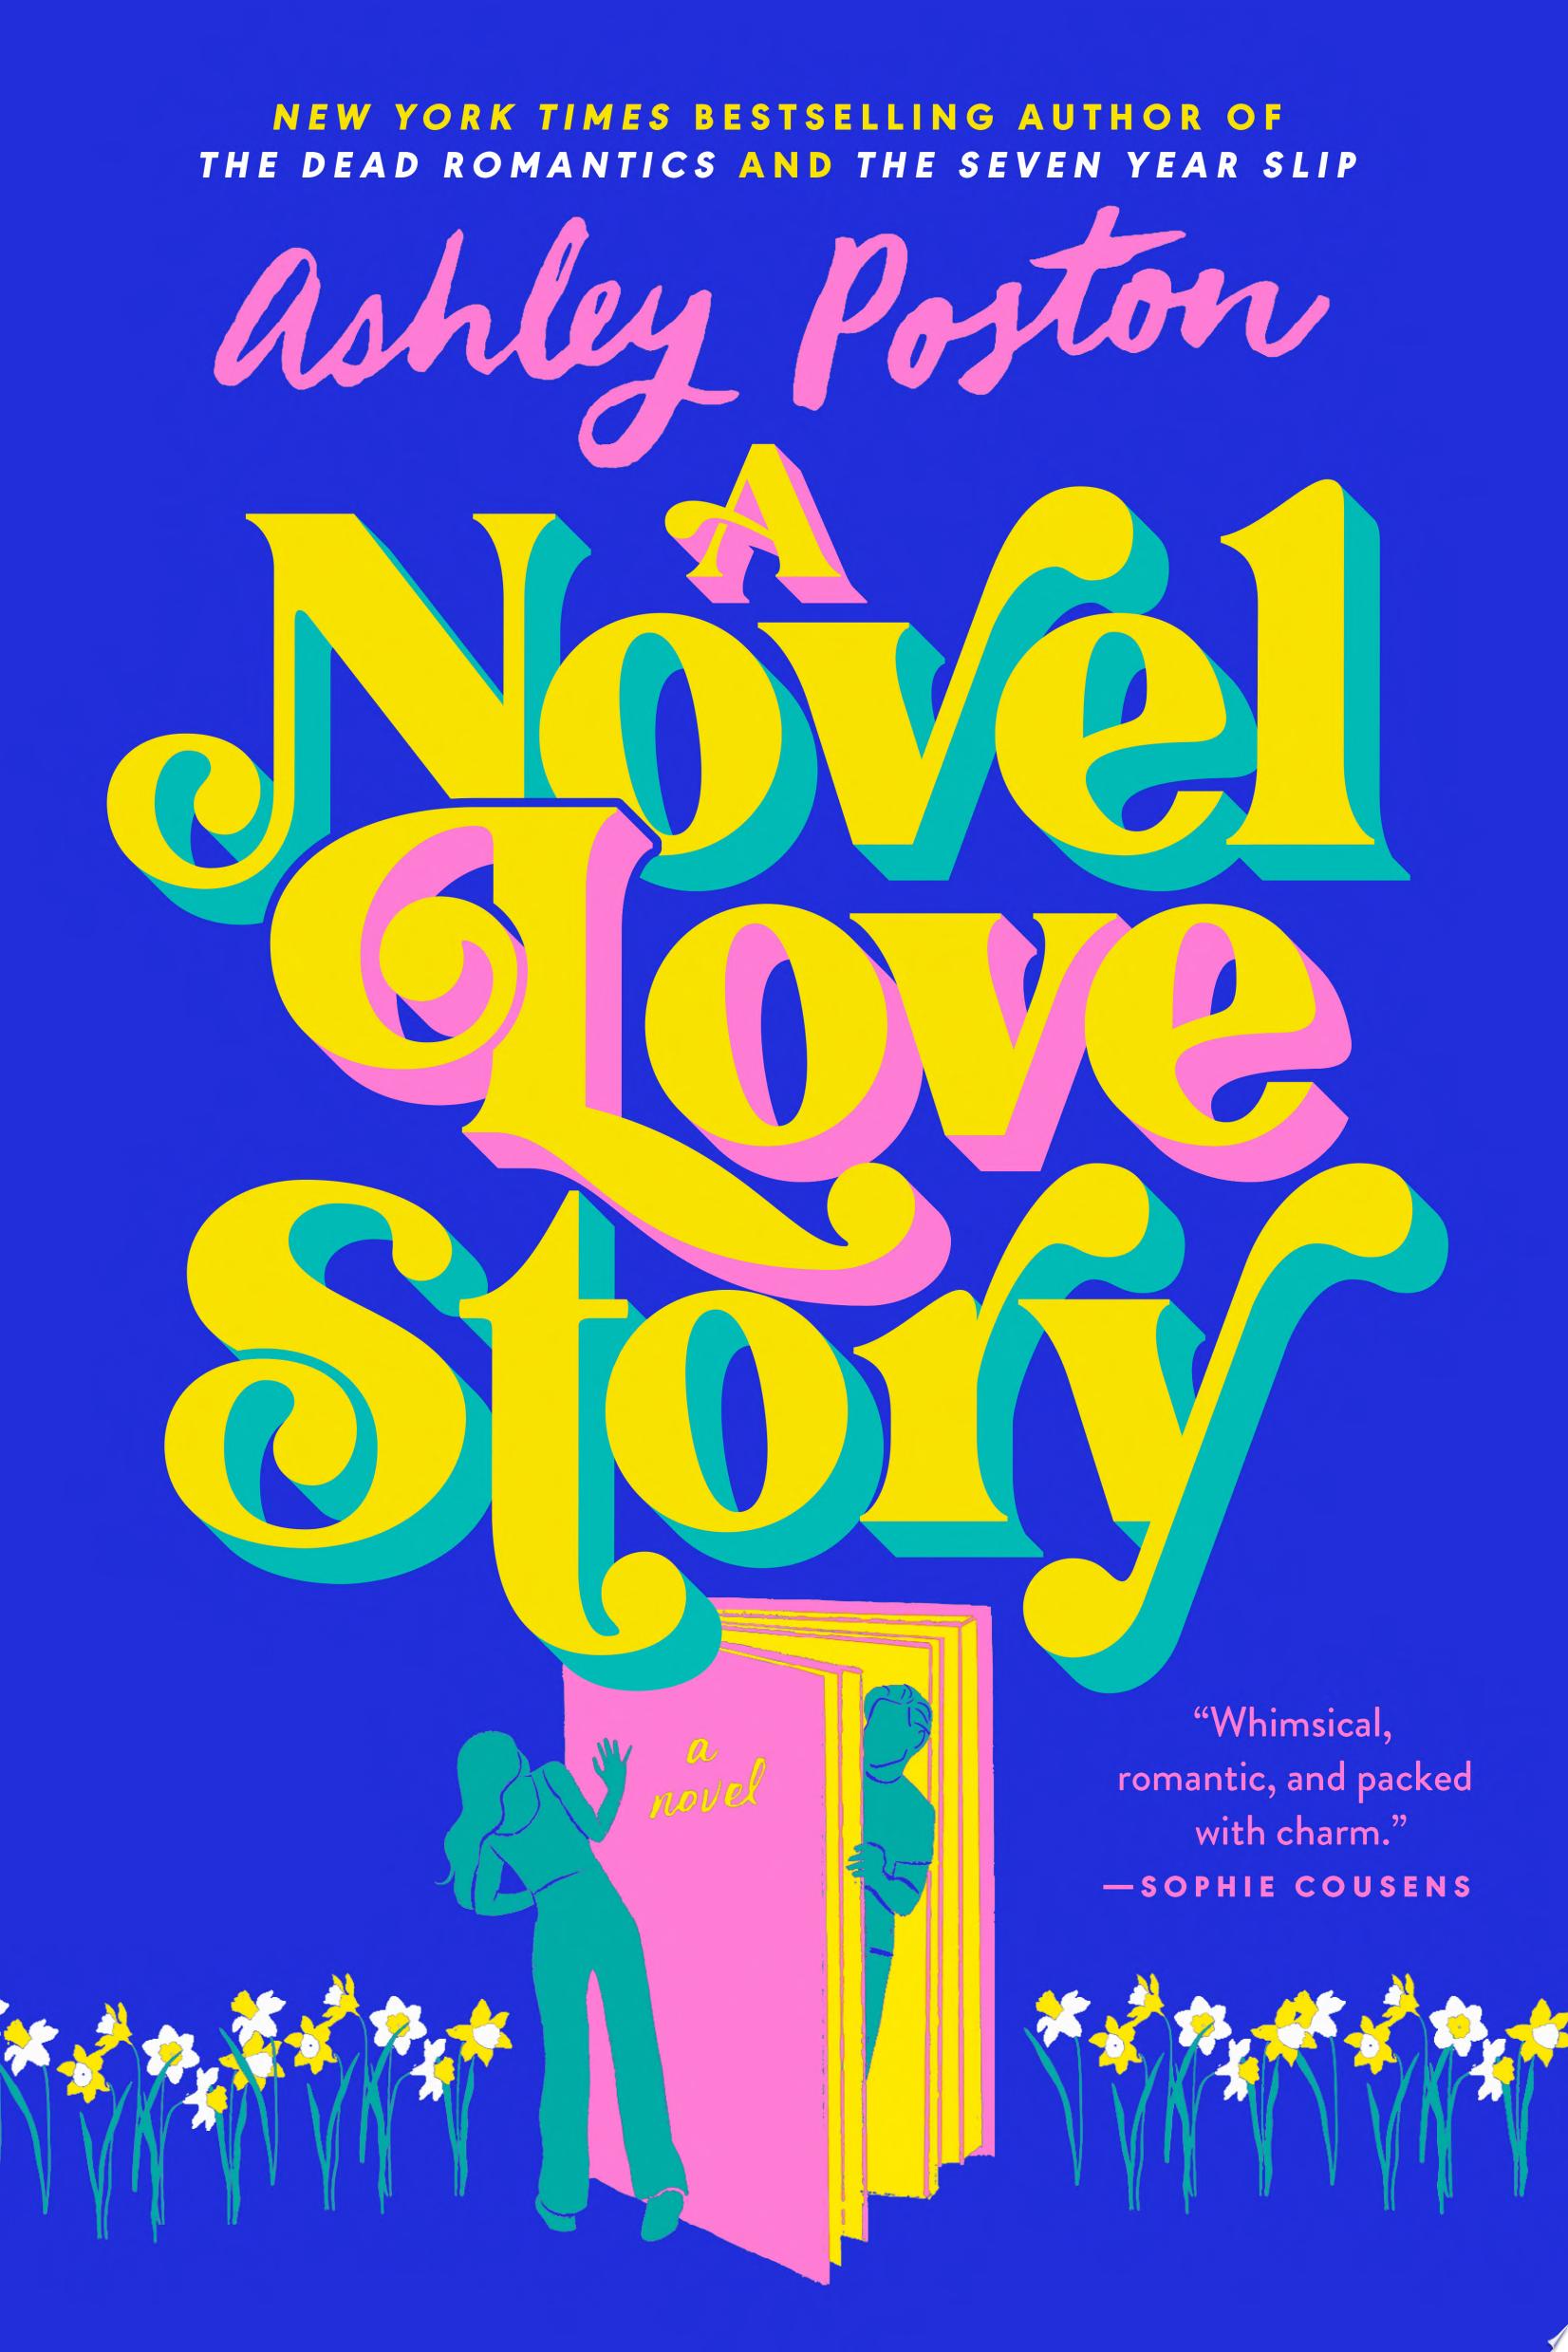 Image for "A Novel Love Story"